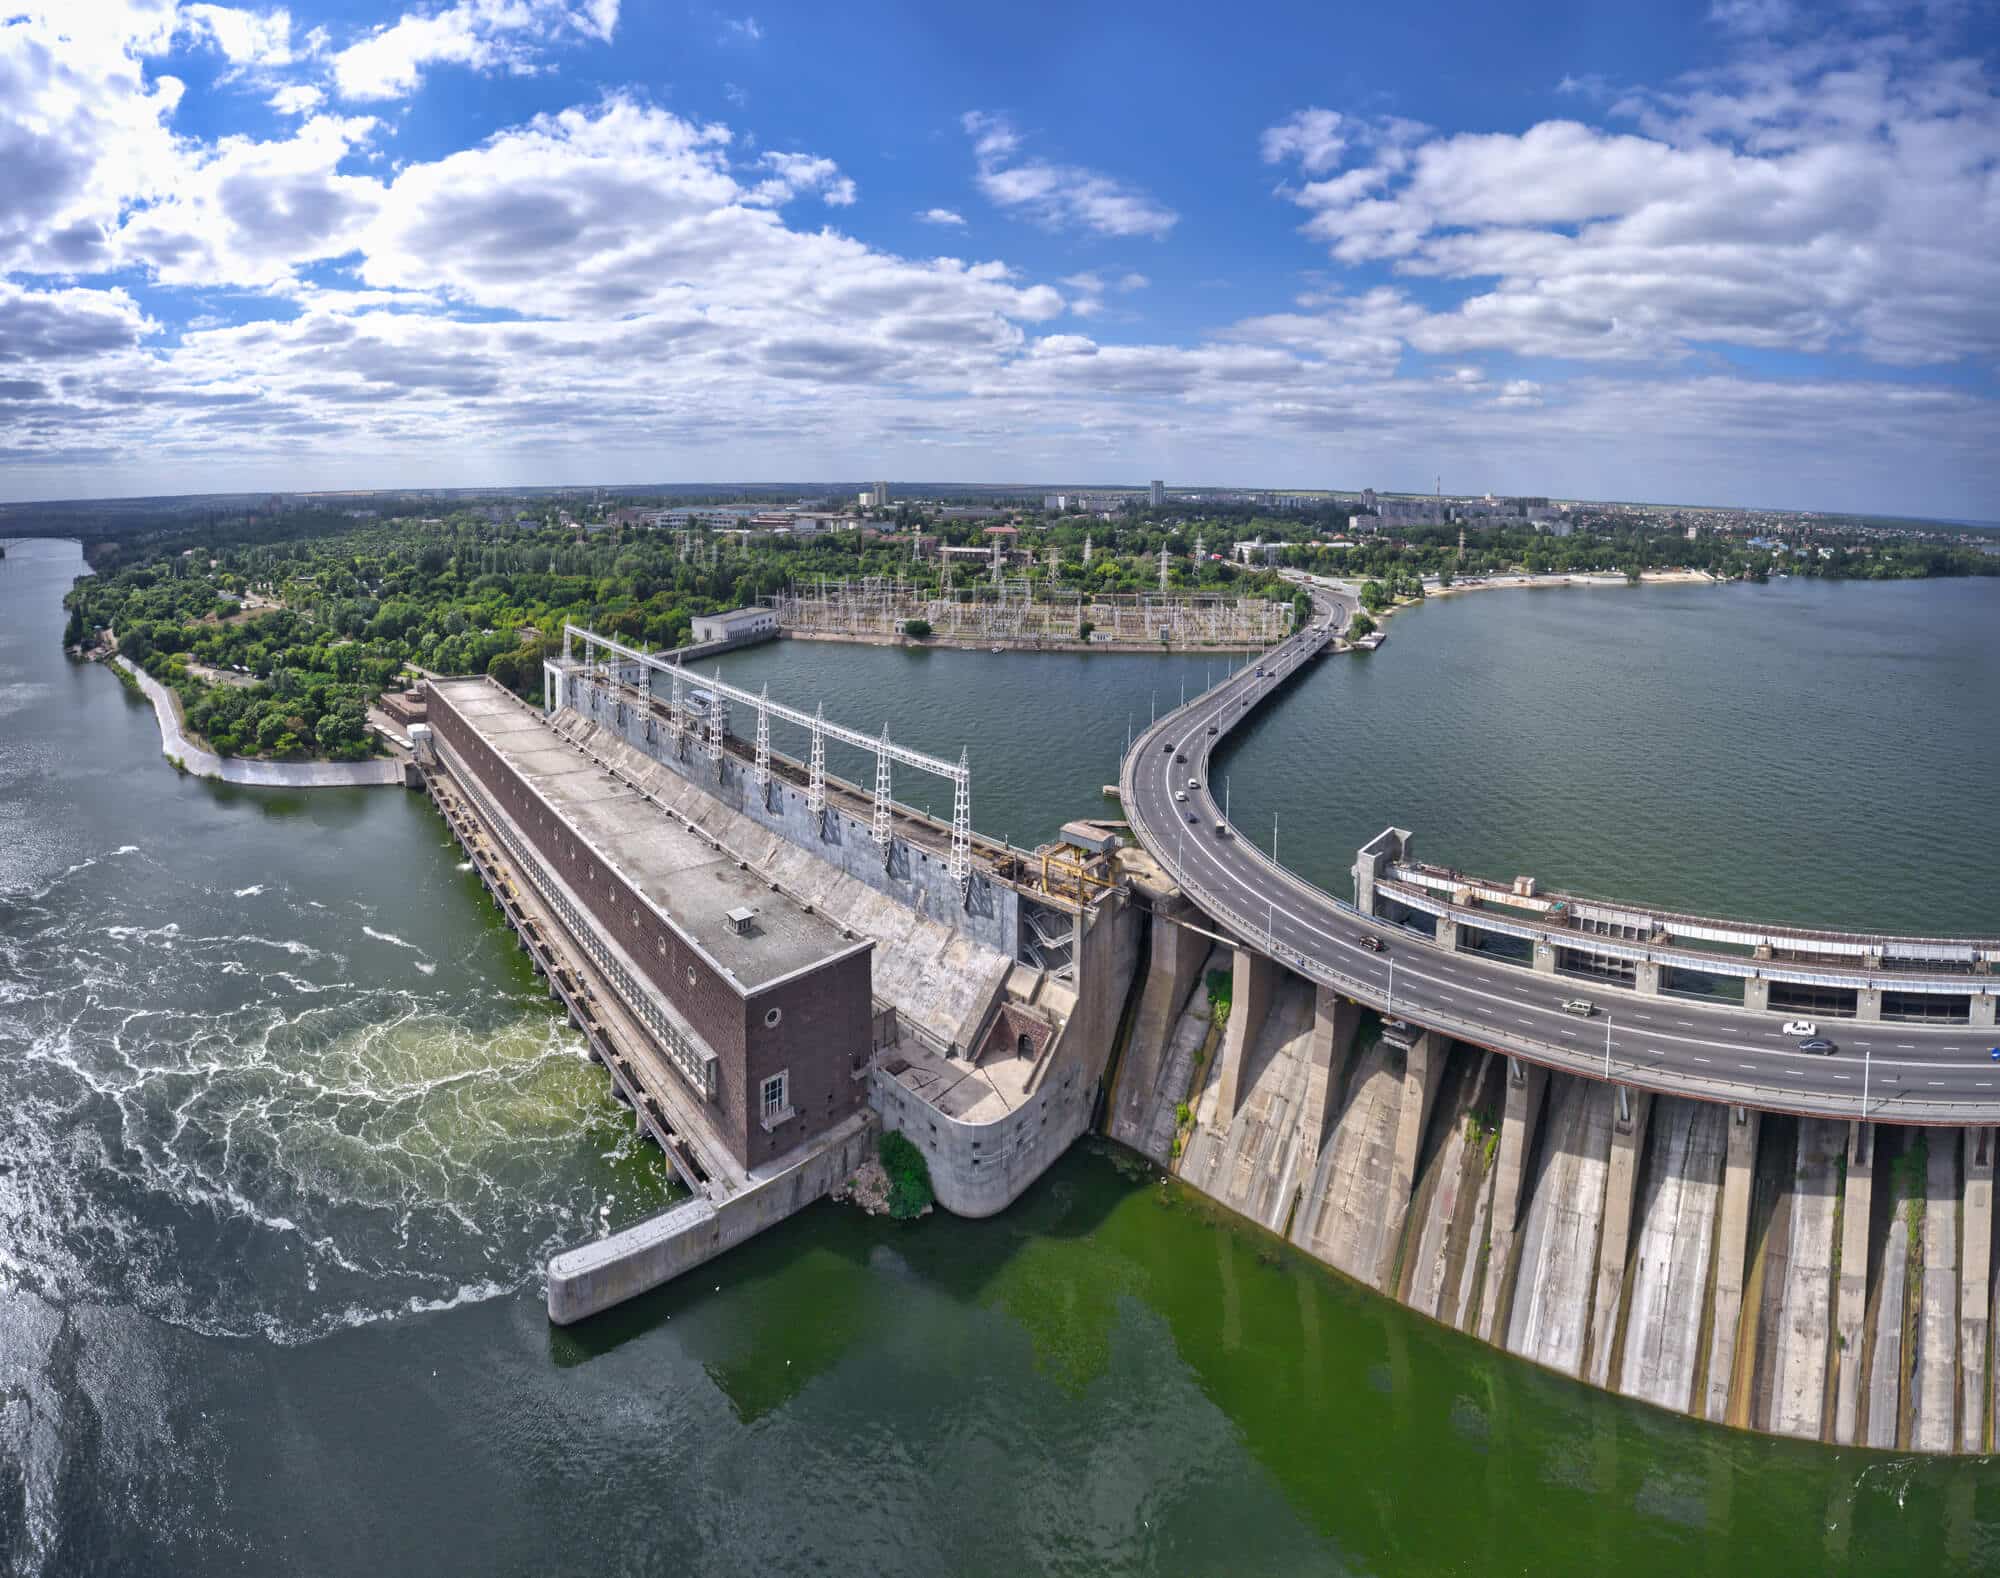 Nova Khakhovka Dam in 2020. Before the Russian invasion. Illustration: depositphotos.com 